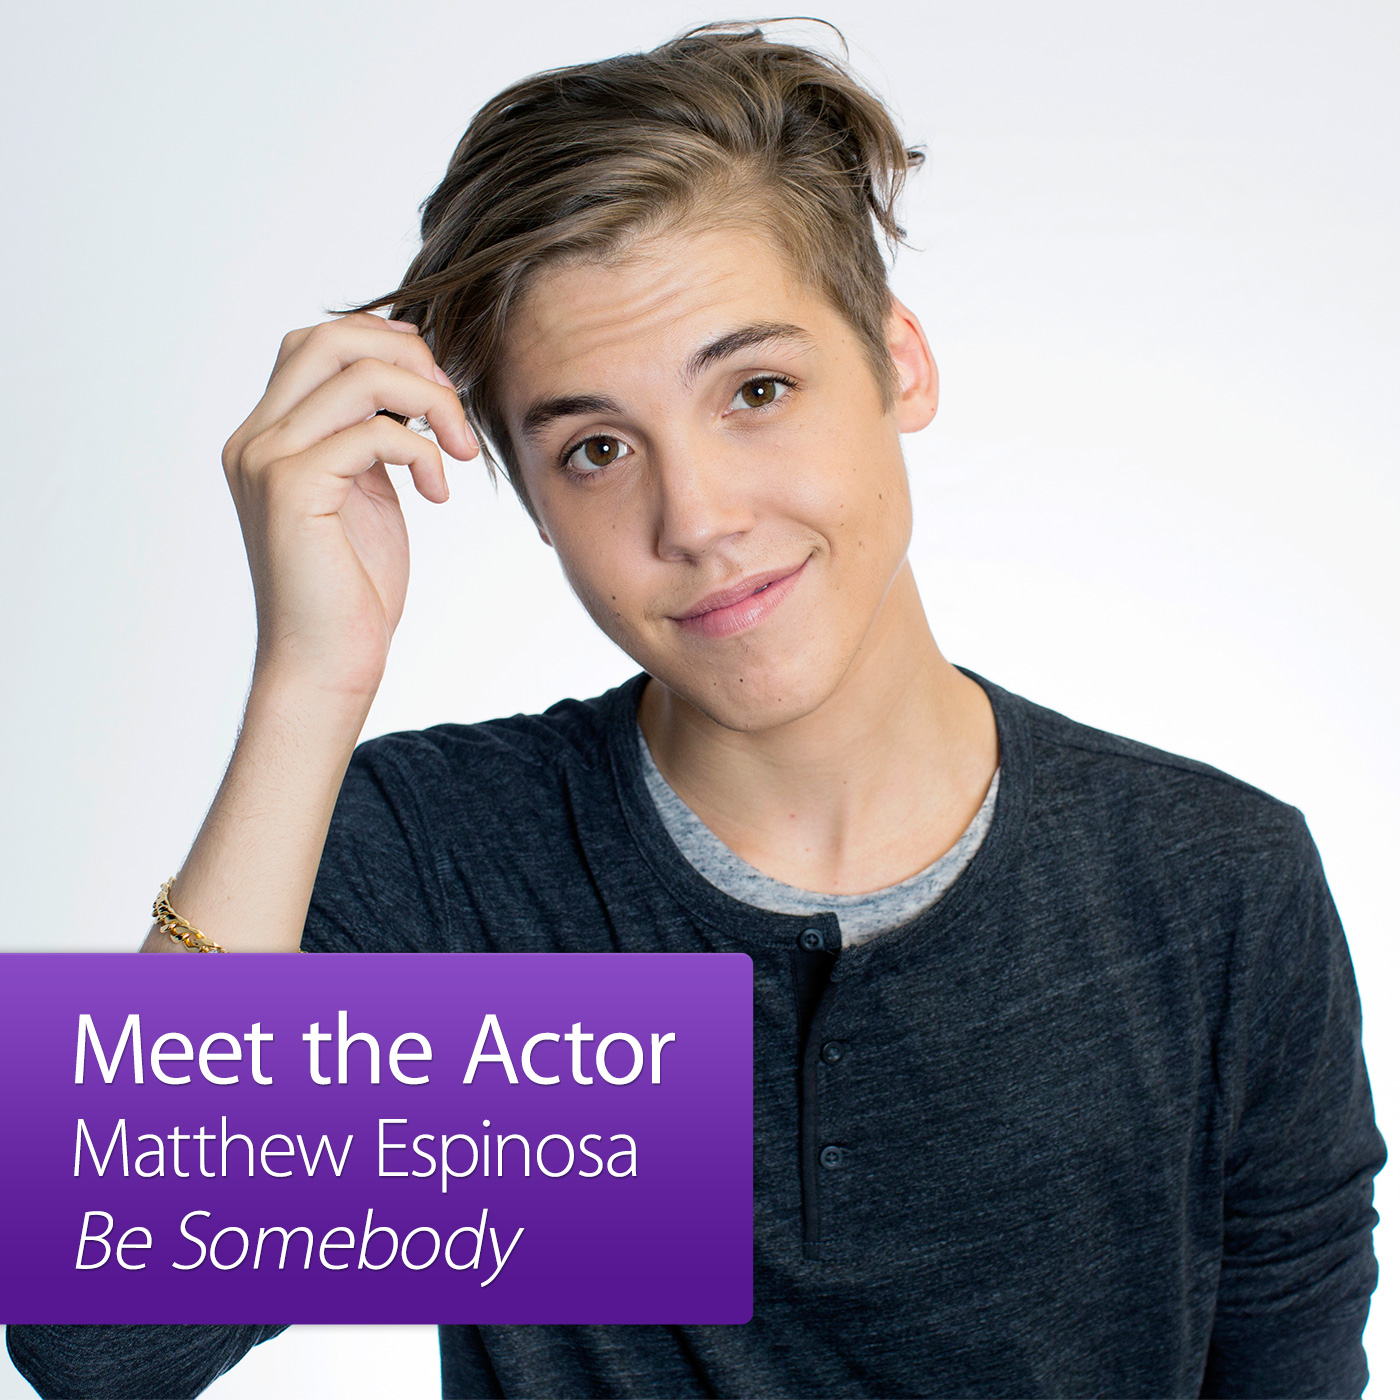 Matthew Espinosa: Meet the Actor